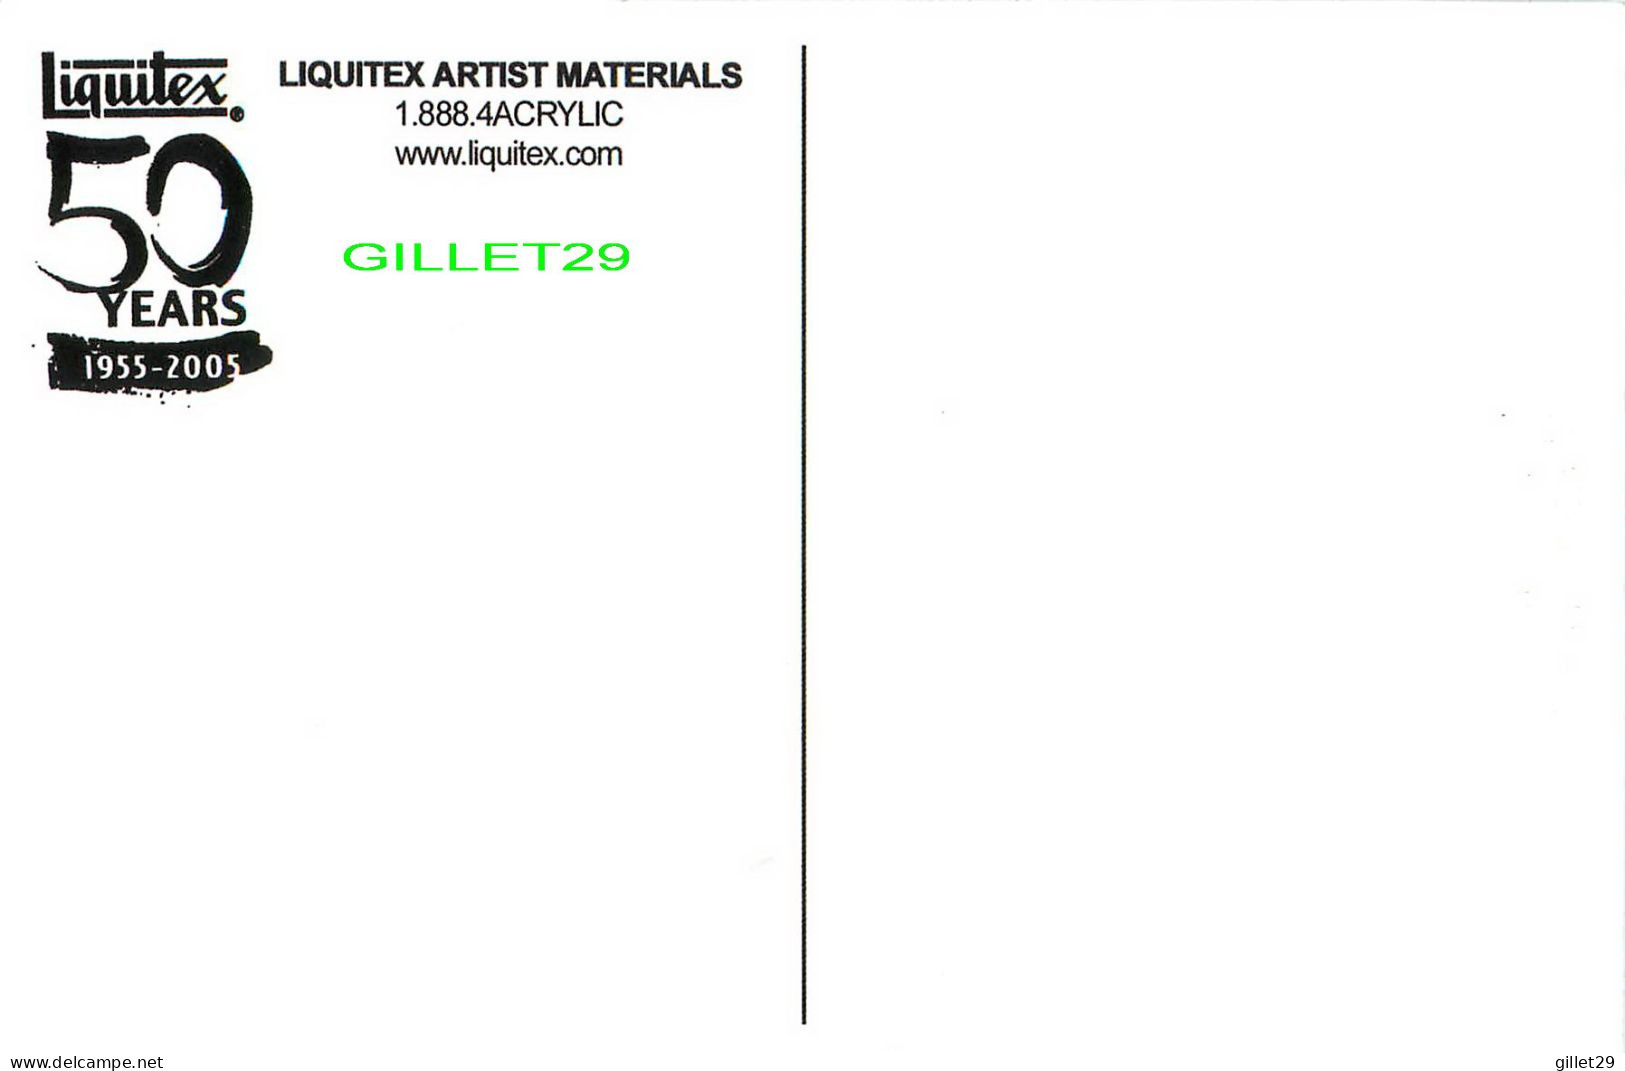 PUBLICITÉ - ADVERTISING - LIQUITEX ARTIST MATERIALS 1955-1005 50 YEARS - TODD RYAN - - Publicité